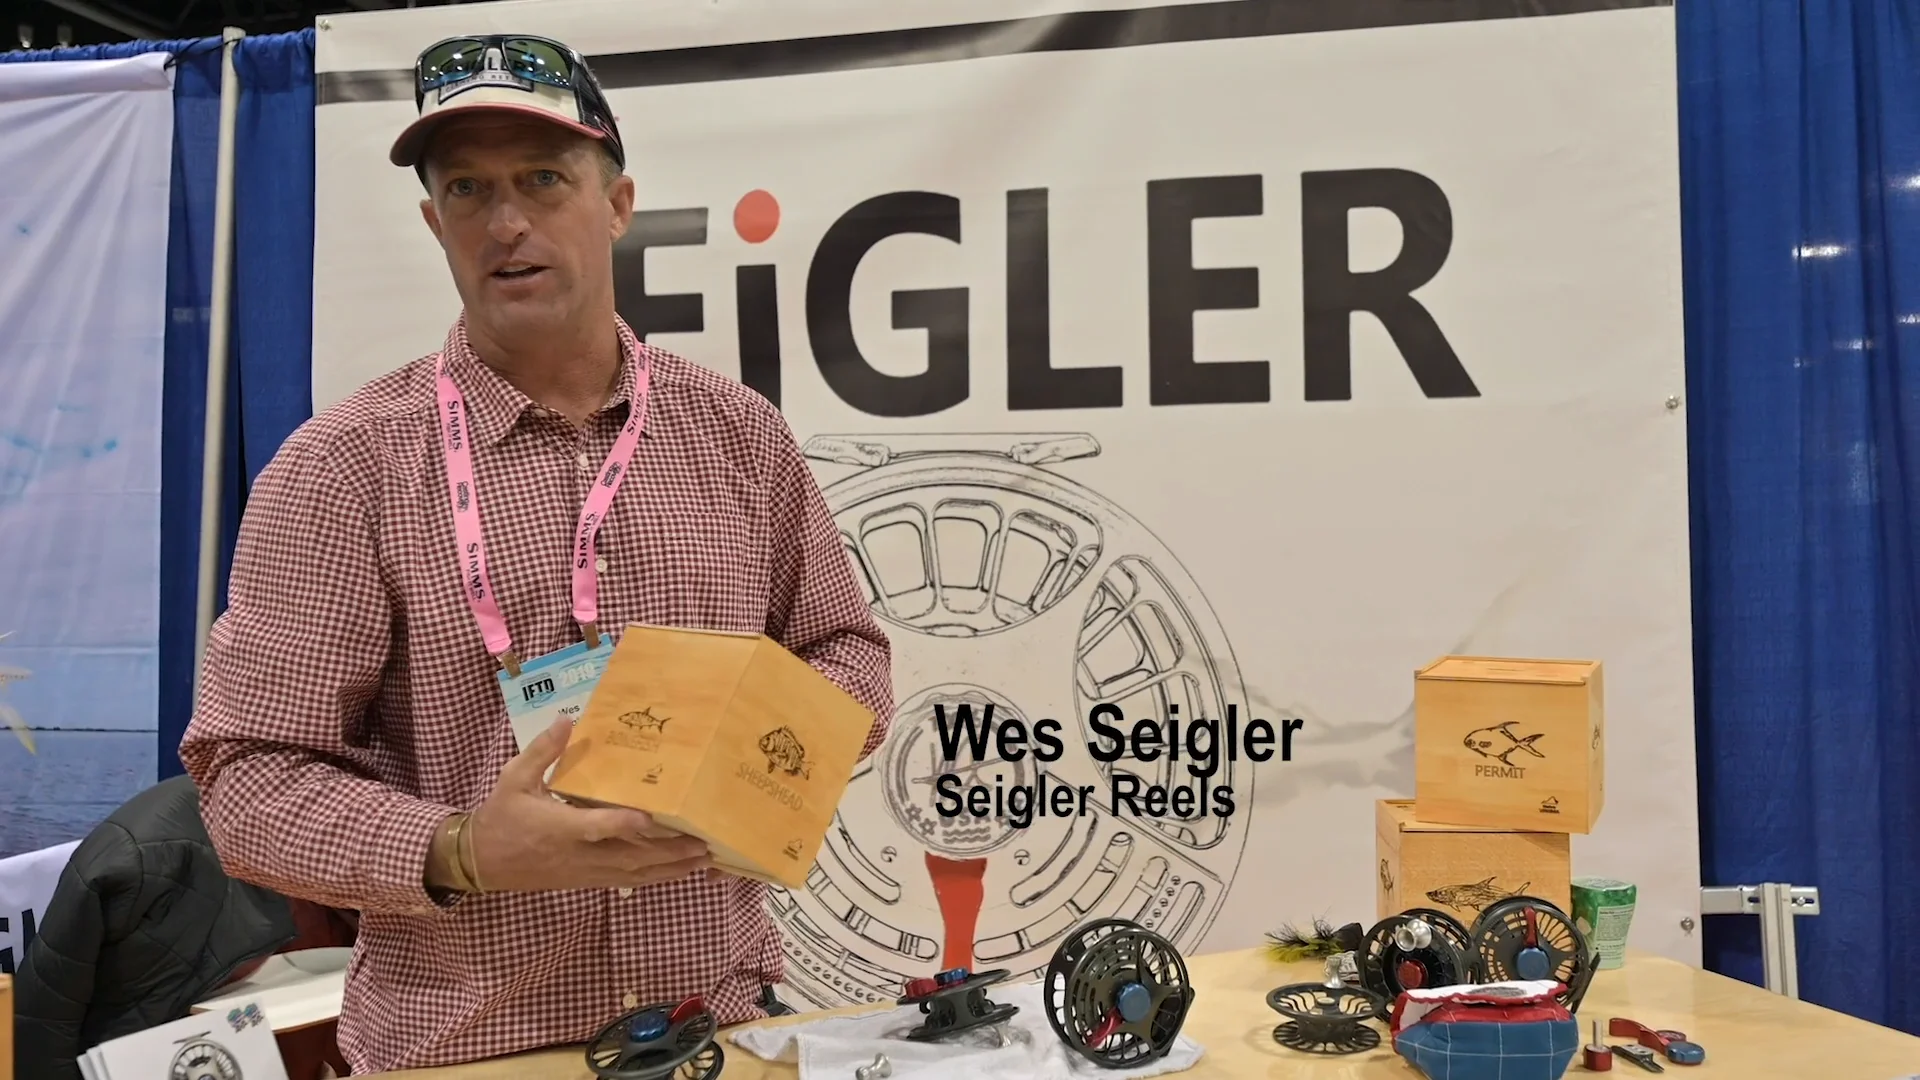 Seigler Reels Box Challenge on Vimeo